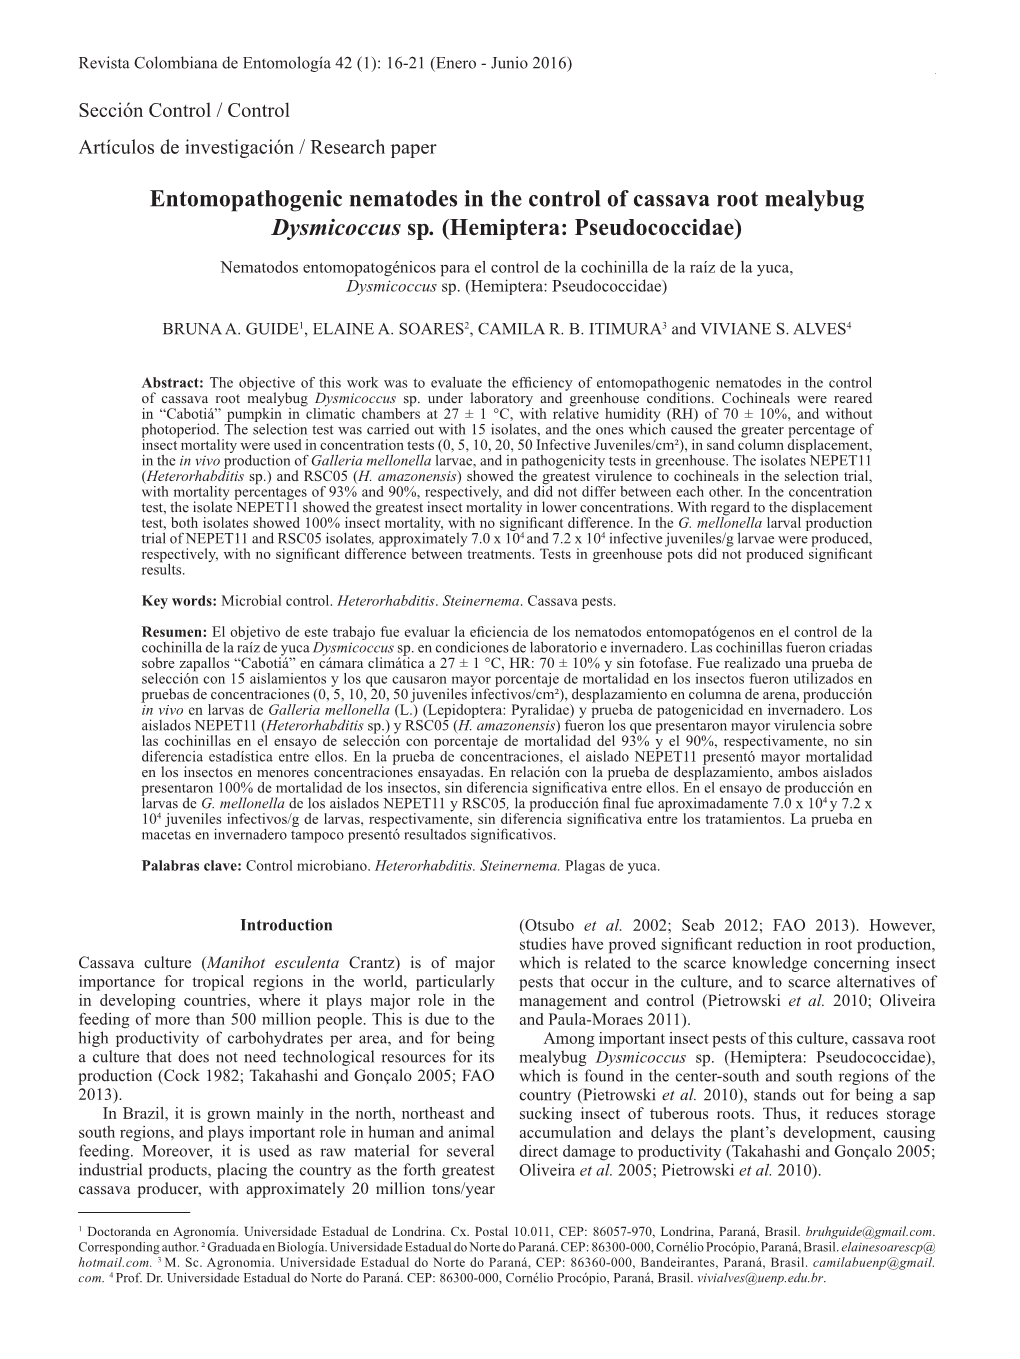 Entomopathogenic Nematodes in the Control of Cassava Root Mealybug Dysmicoccus Sp